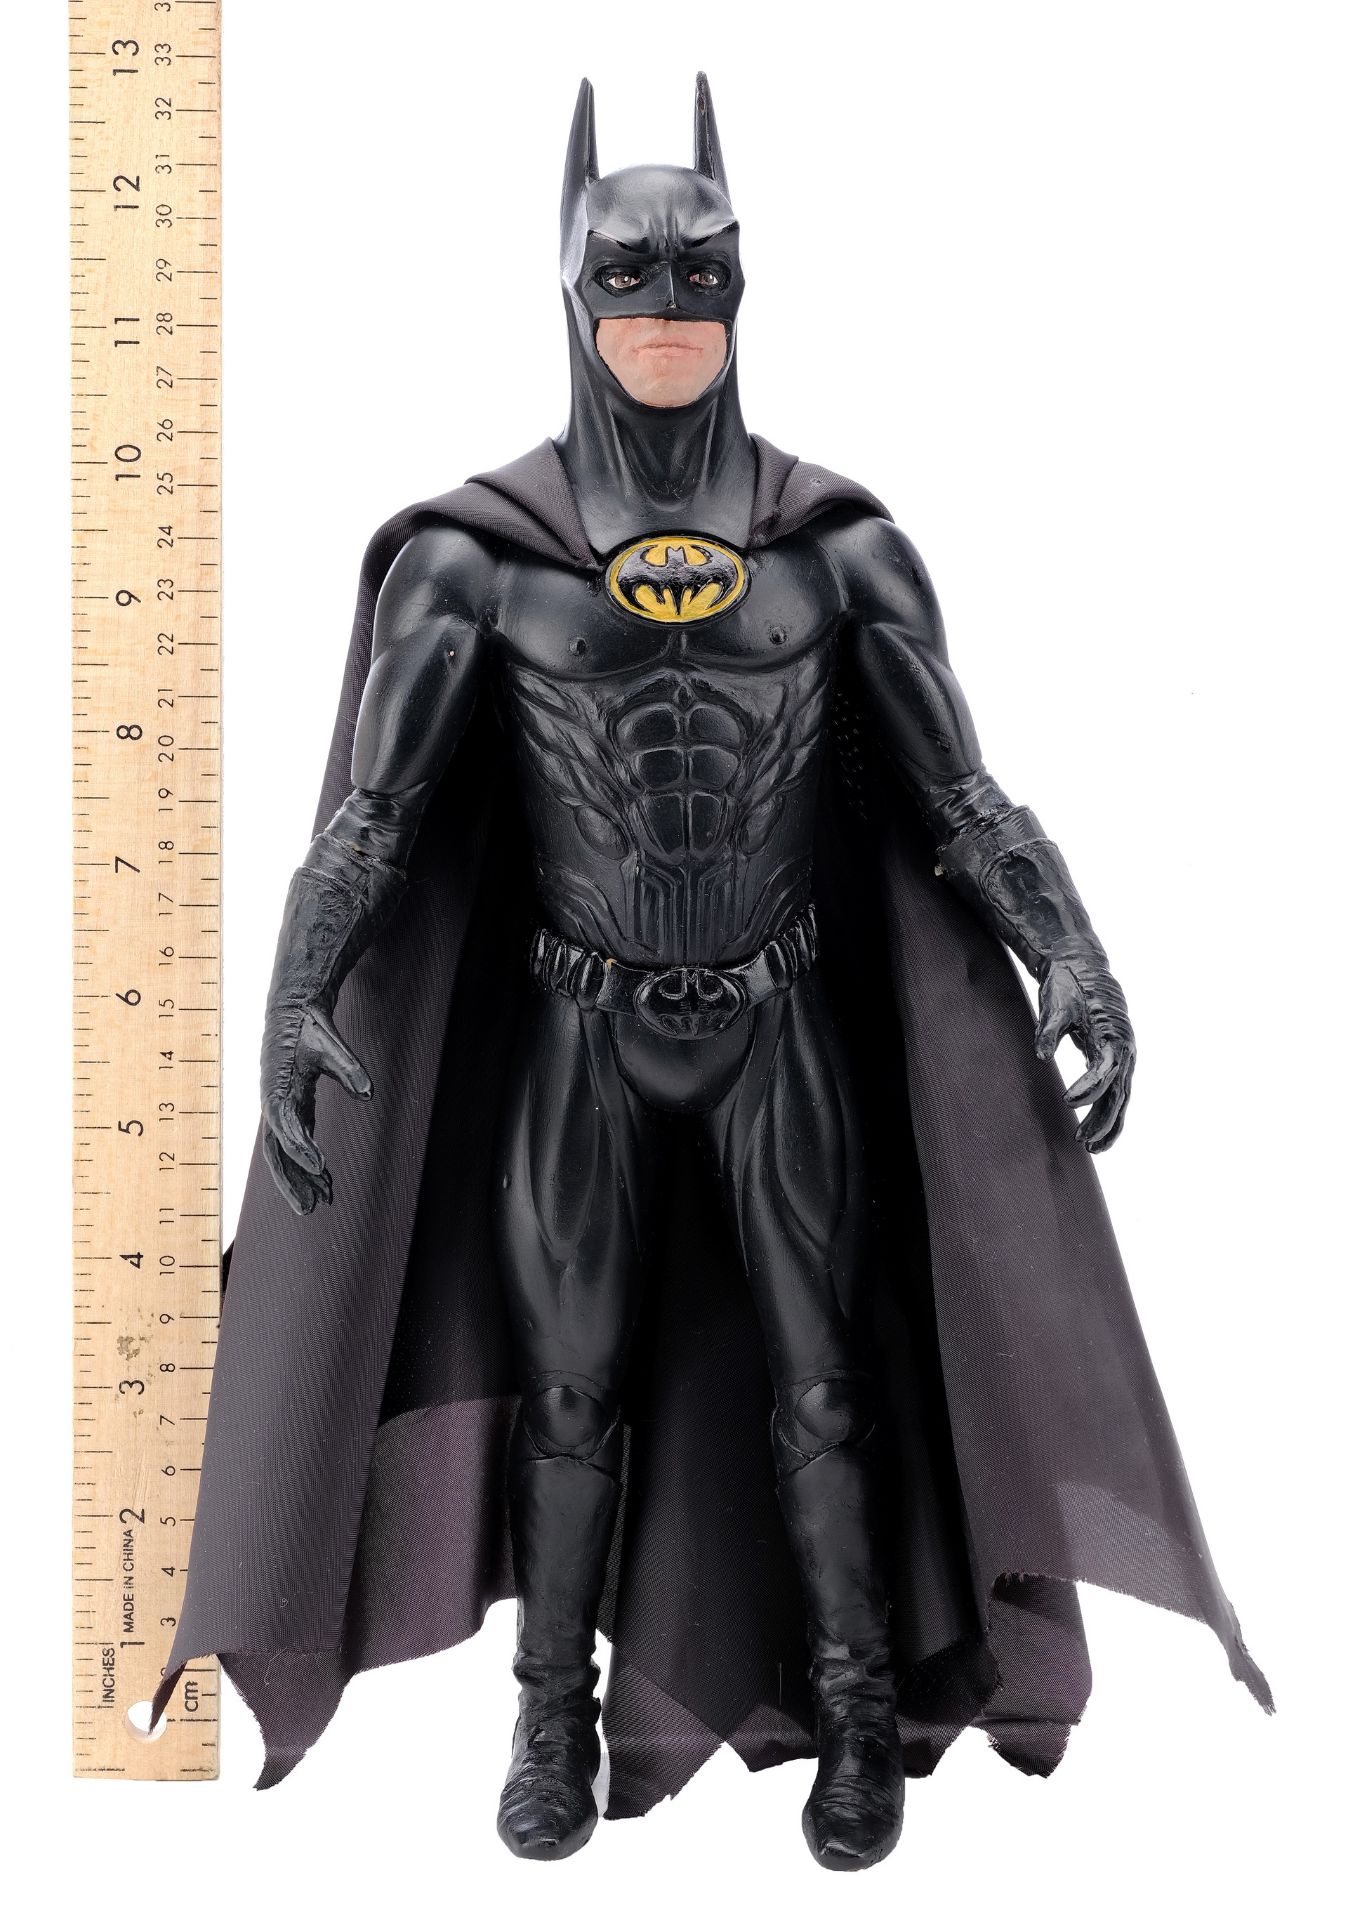 BATMAN FOREVER (1995) - Batman (Val Kilmer) Model Miniature - Image 5 of 5